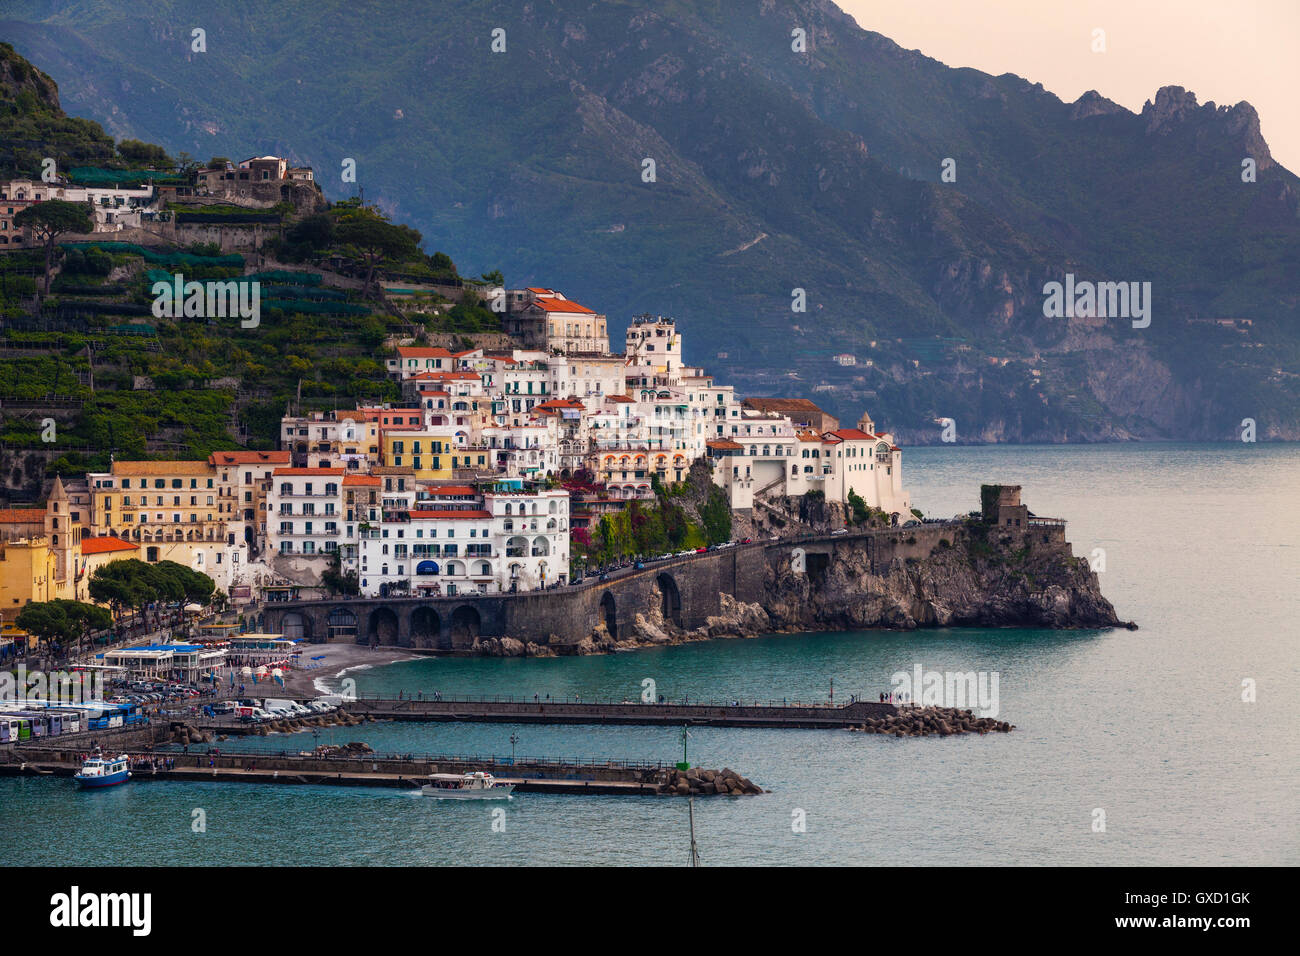 Edificio su cliffside e marina, Amalfi Costiera Amalfitana, Italia Foto Stock